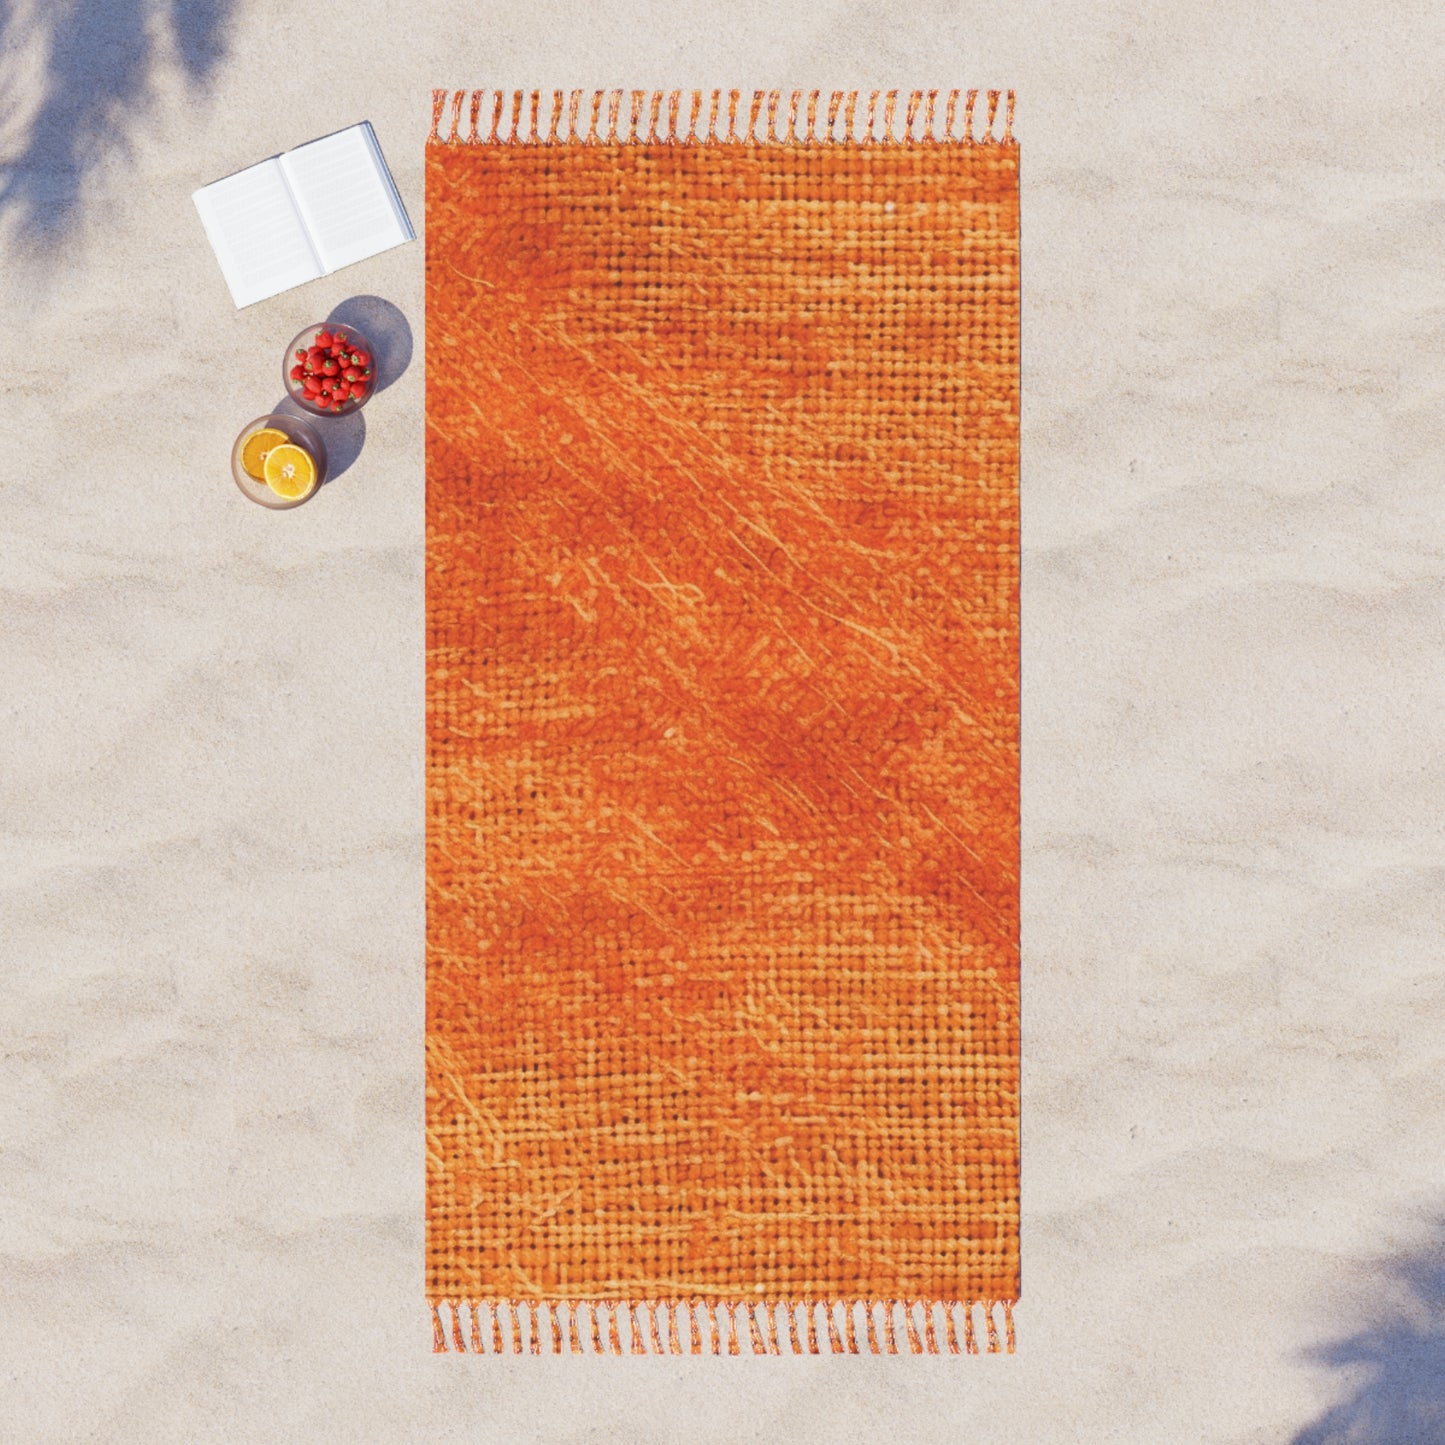 Burnt Orange/Rust: Denim-Inspired Autumn Fall Color Fabric - Boho Beach Cloth